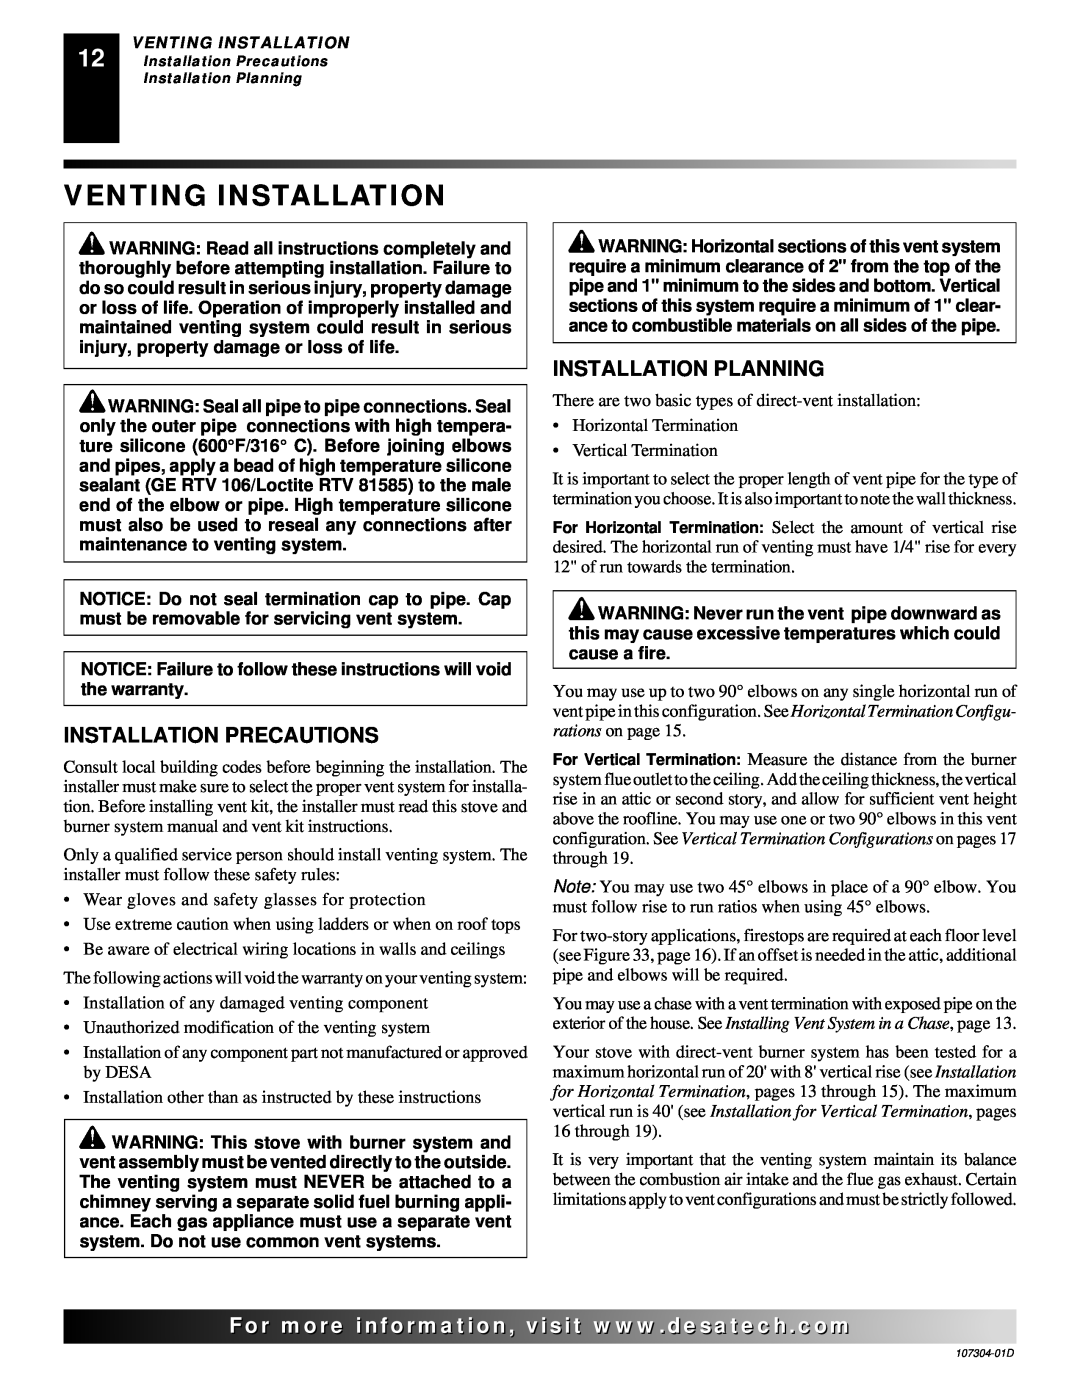 Desa SDVBPC, SDVBNC installation manual Venting Installation, Installation Precautions, Installation Planning 